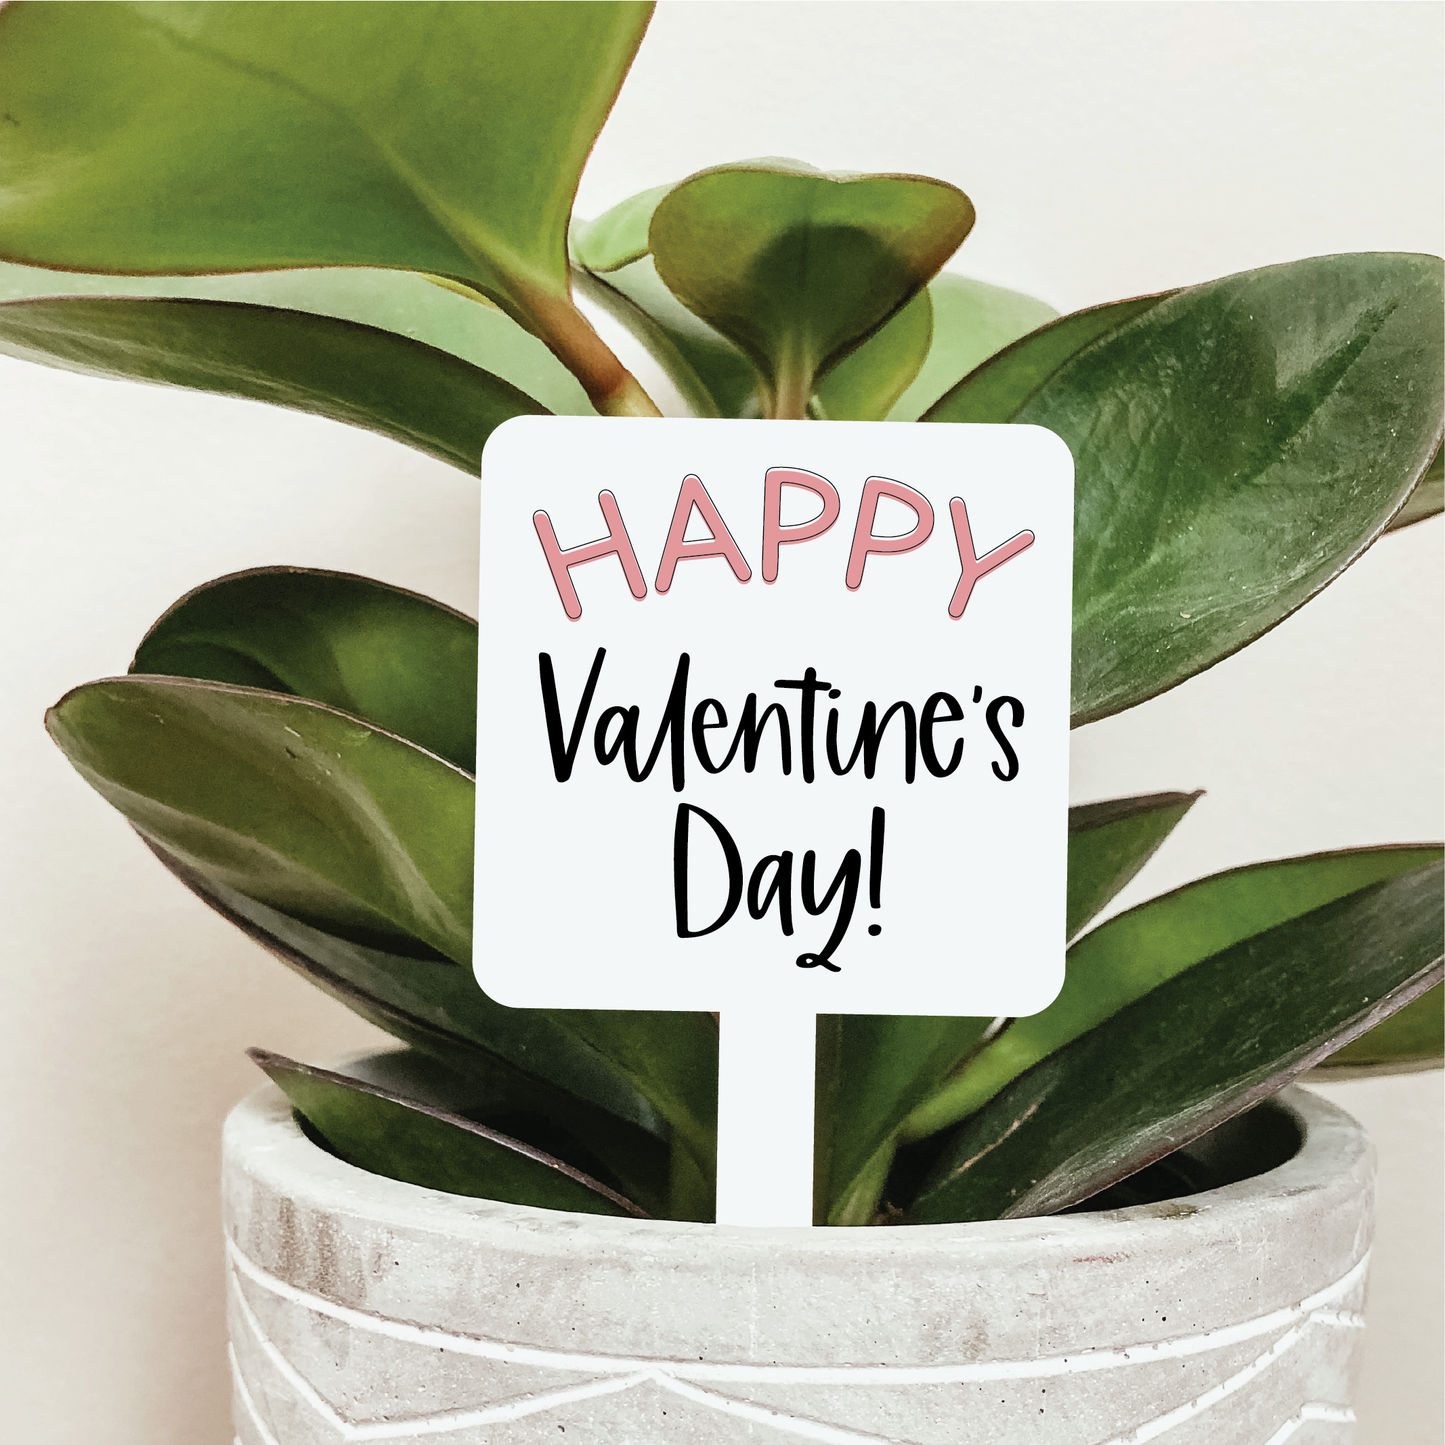 Happy Valentine's Day Plant Marker